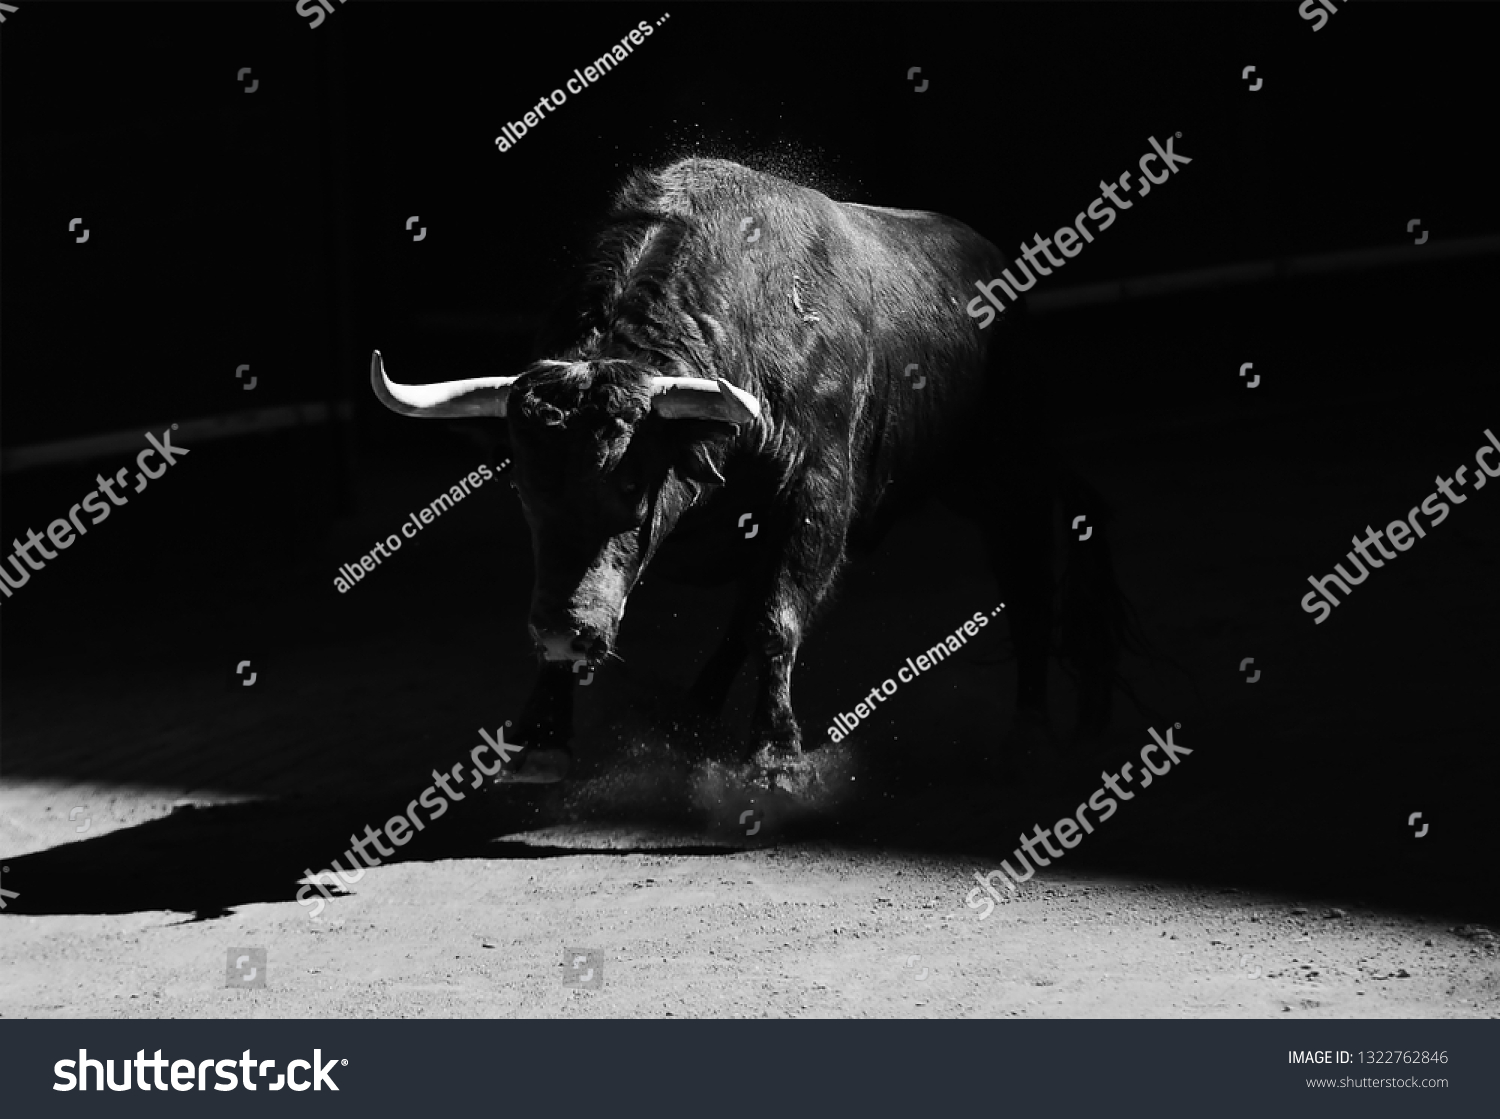 Bull in bullring on spain #1322762846